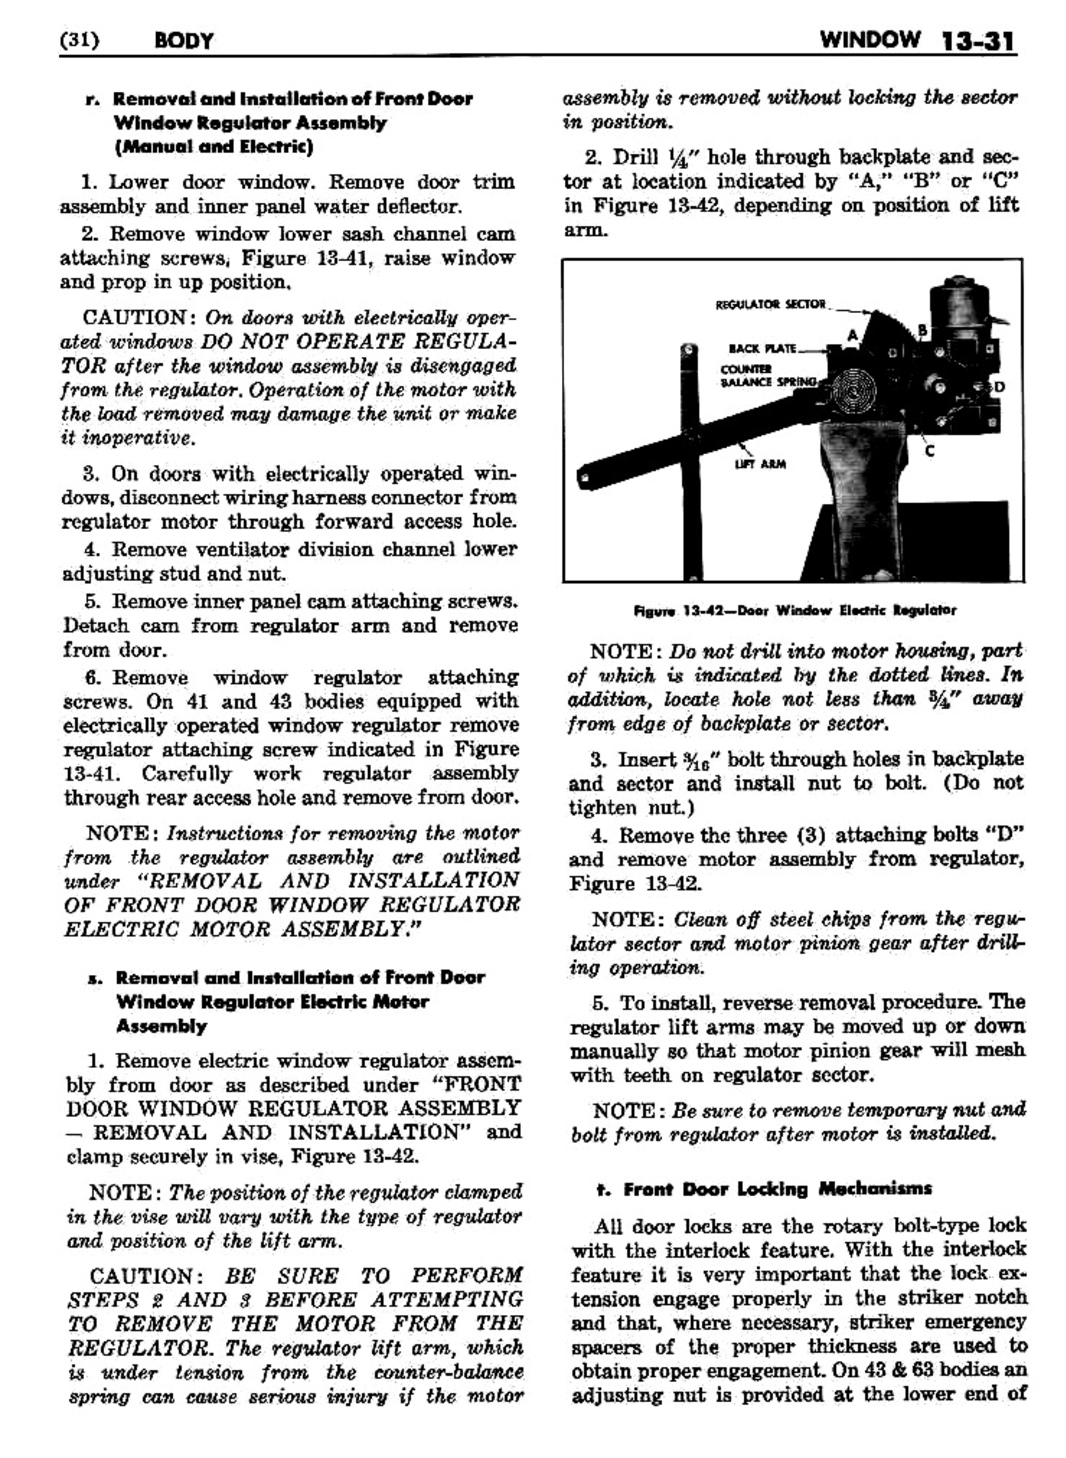 n_1957 Buick Body Service Manual-033-033.jpg